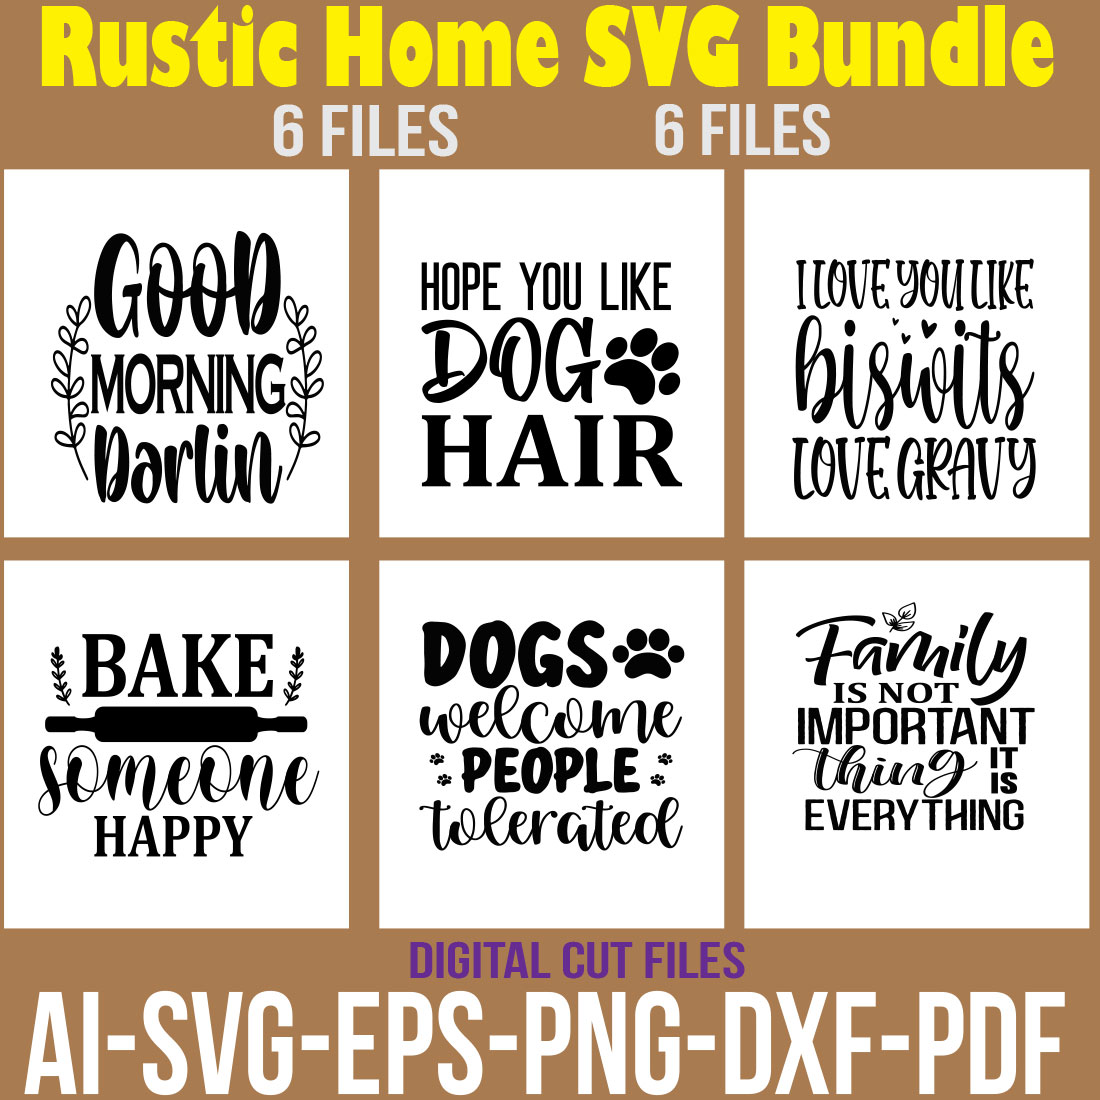 Rustic Home SVG Bundle cover image.